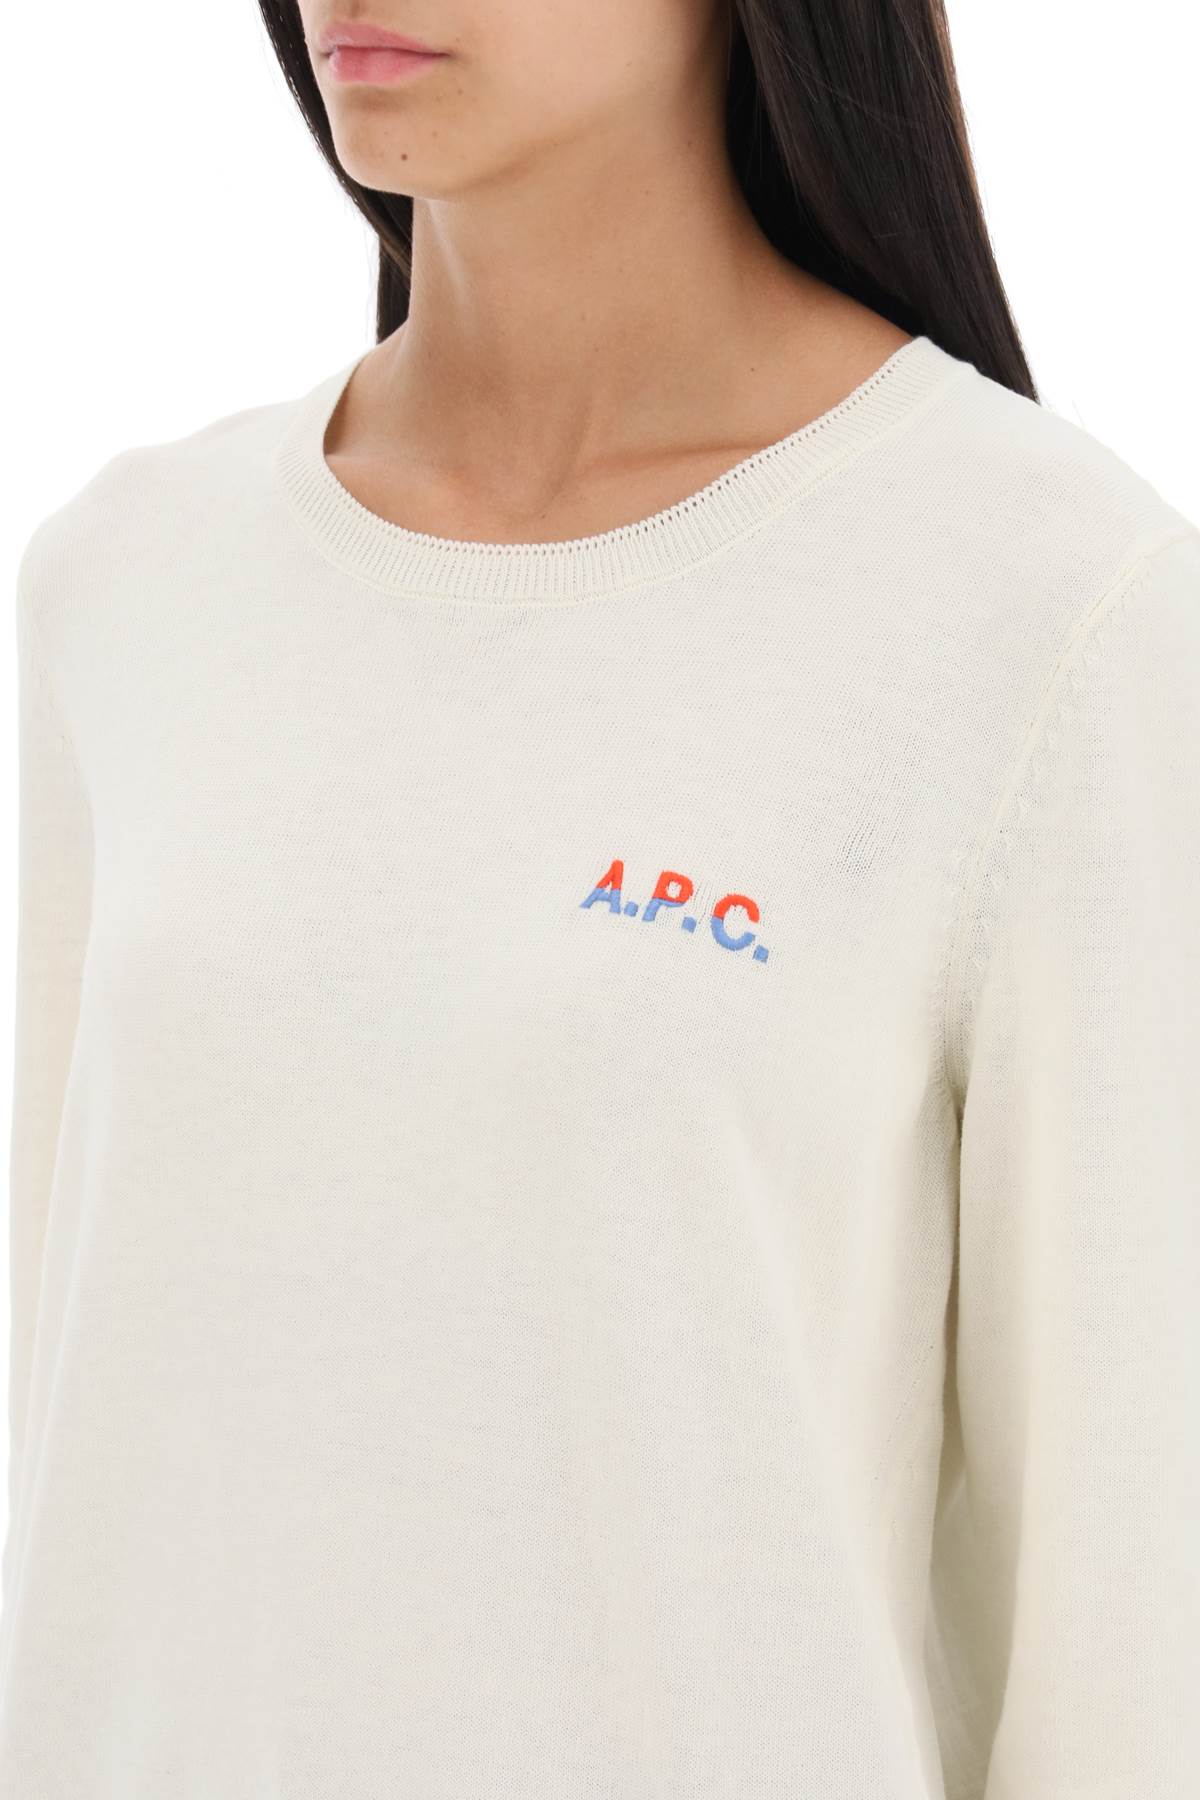 A.P.C. A.p.c. 'albane' crew-neck cotton sweater